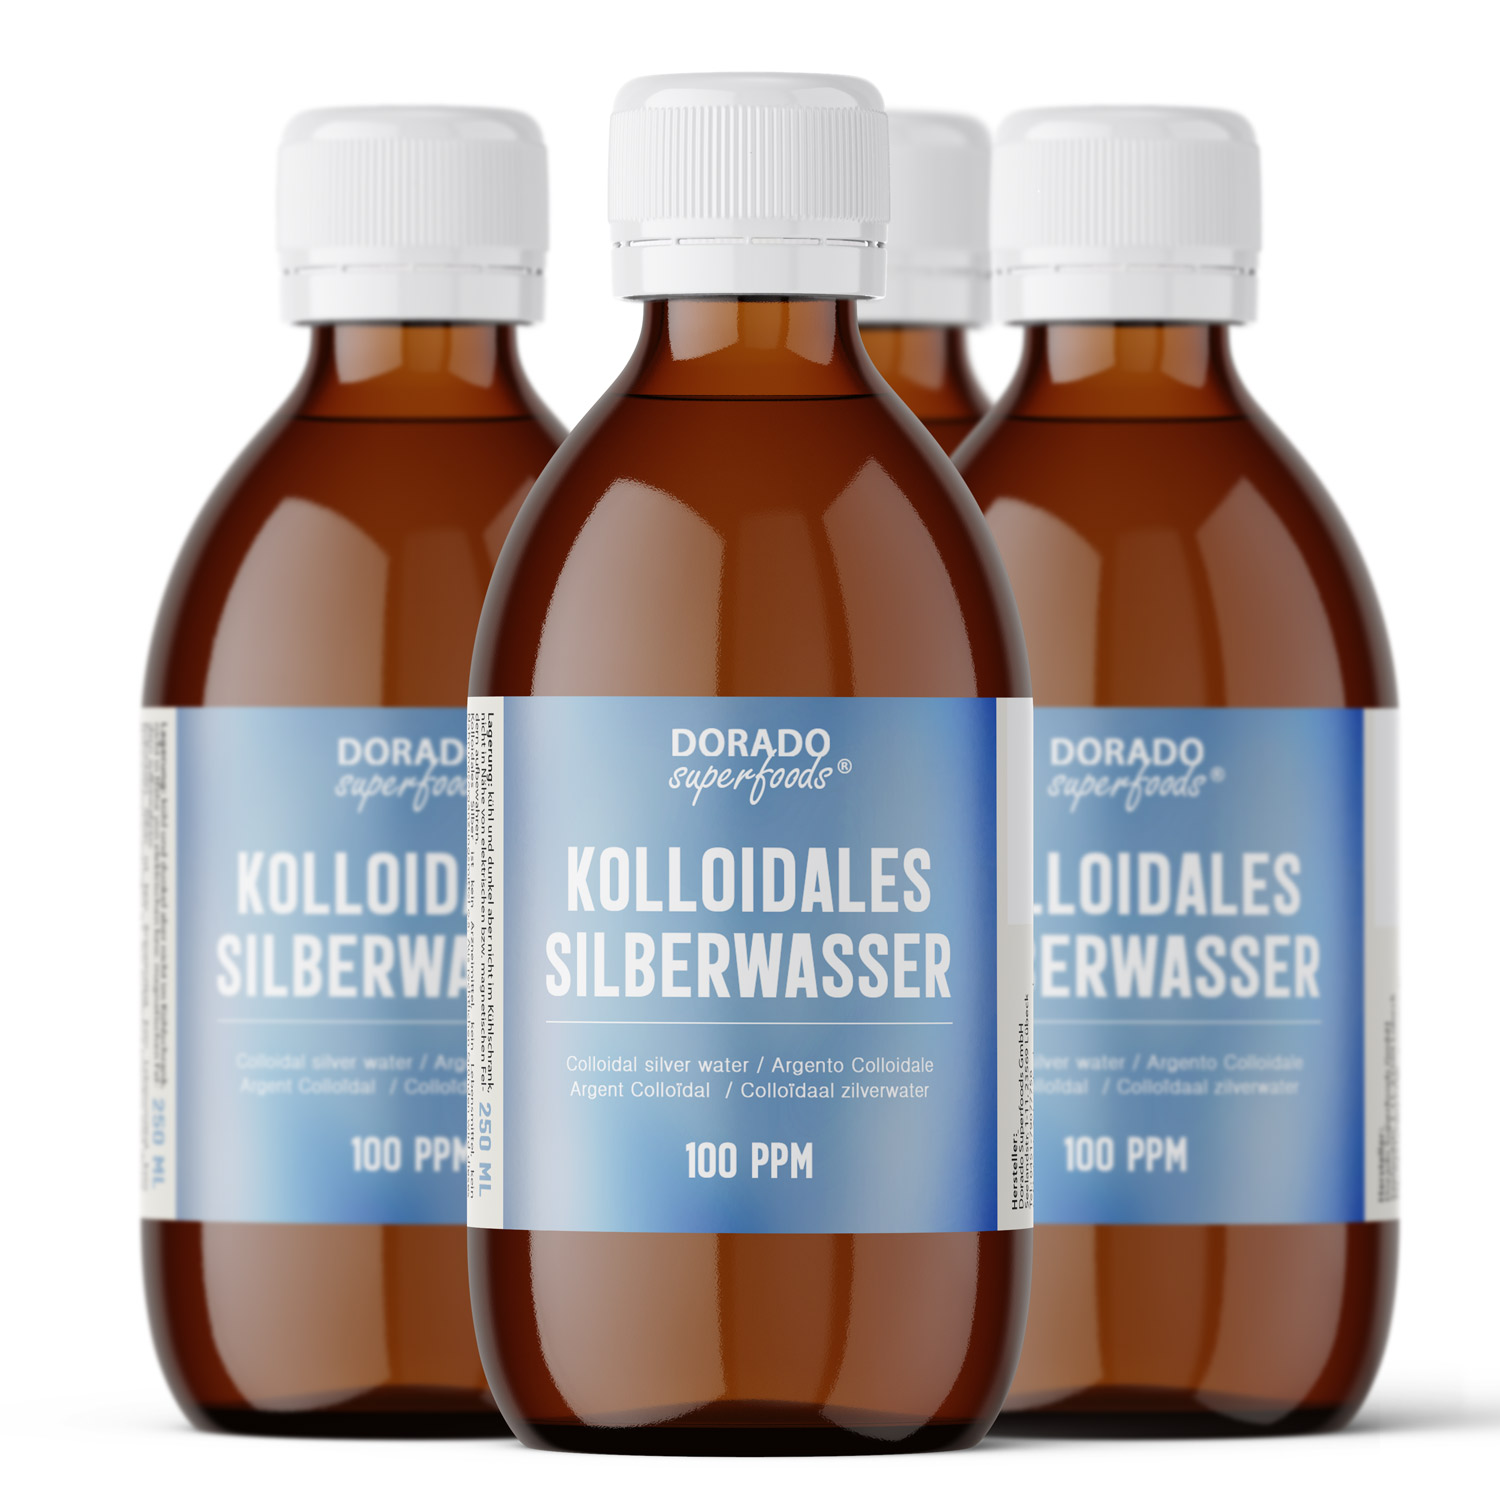 kolloidales Silberwasser 100 ppm - 1000 ml (4 x 250 ml)